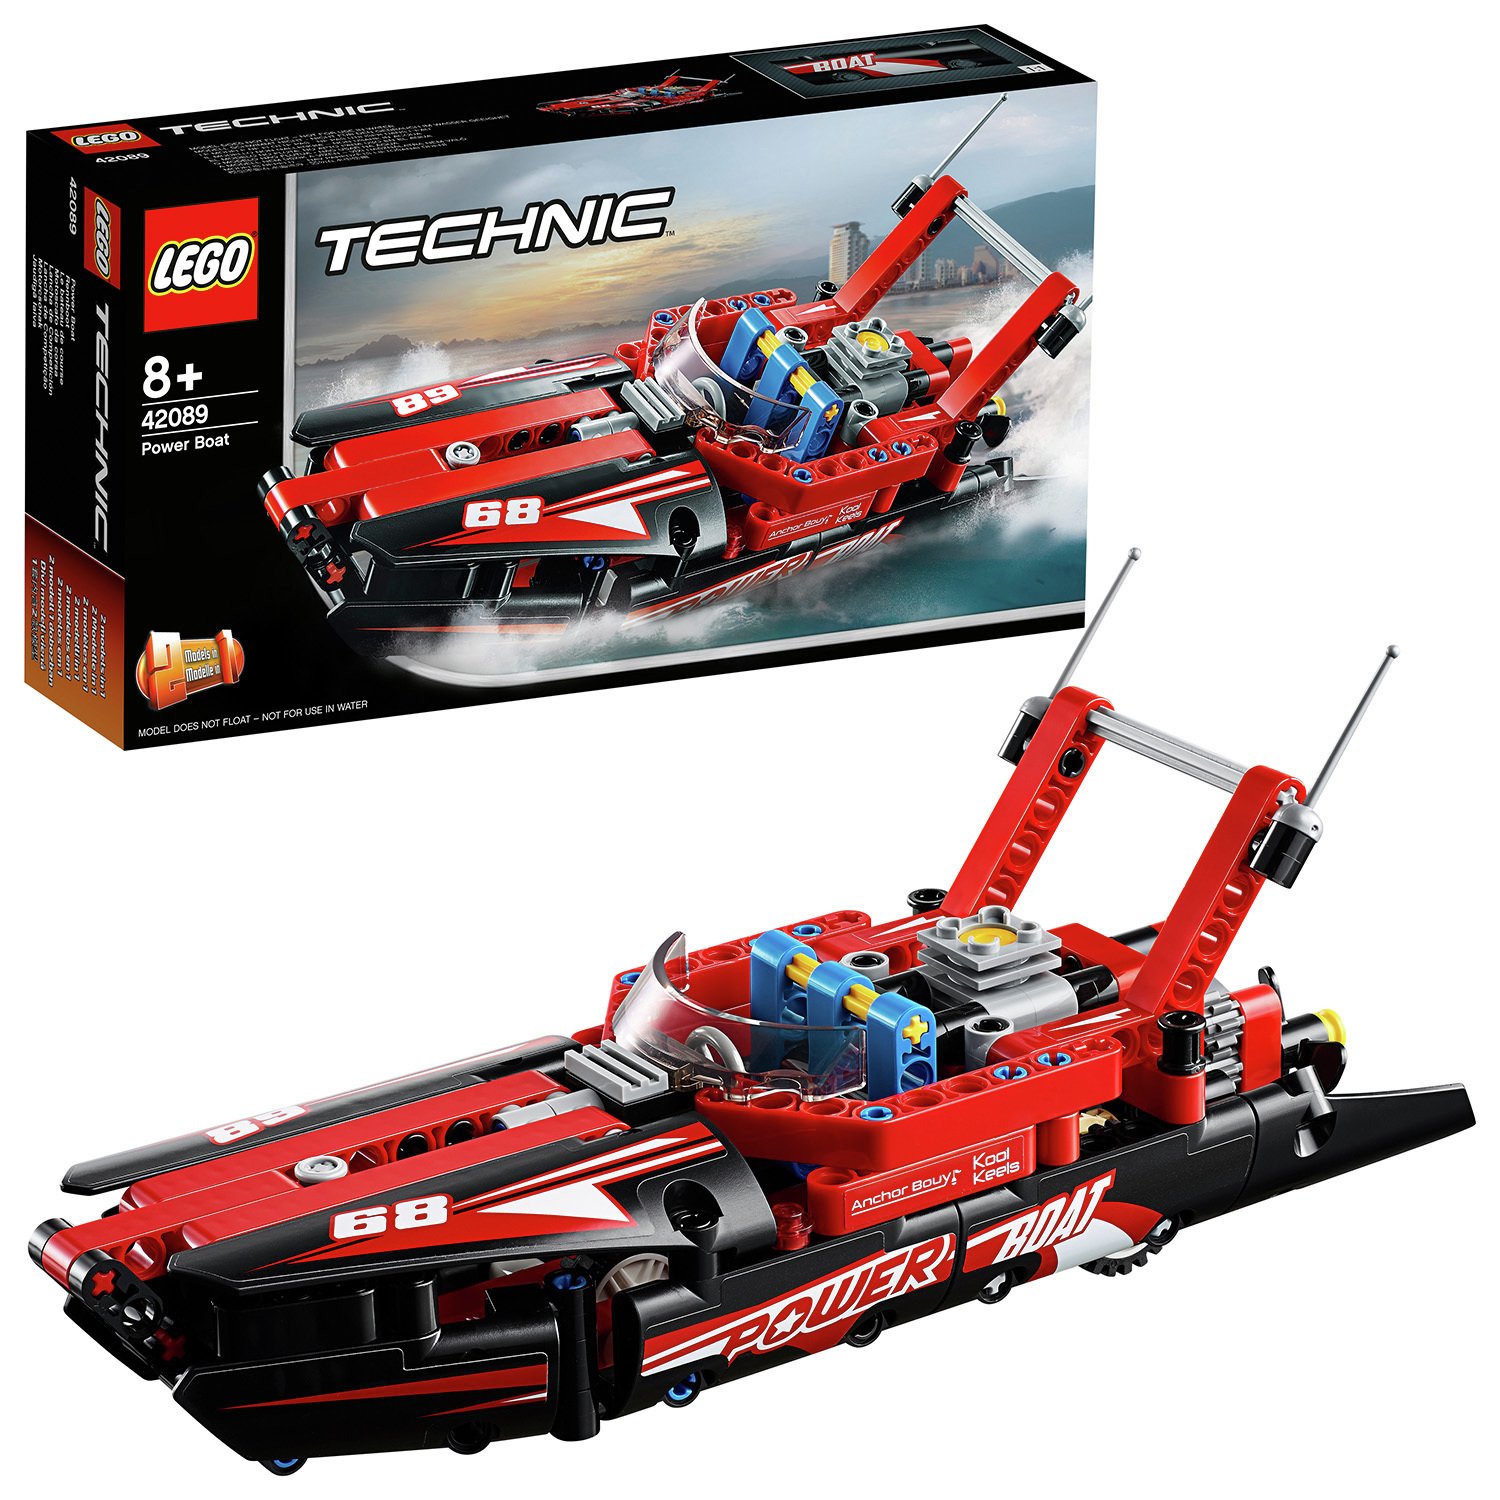 LEGO Technic Power Boat Building Set- 42089